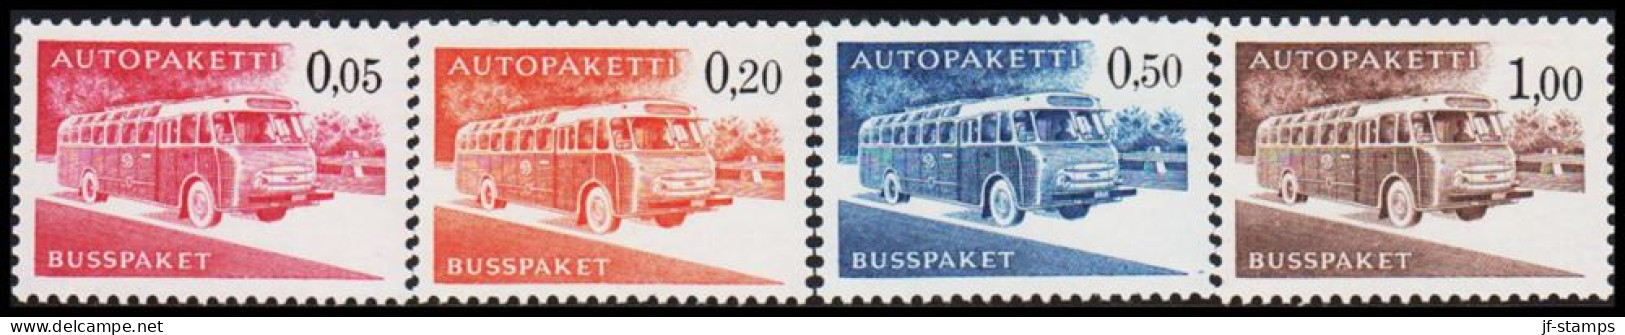 1963-1980. FINLAND. Mail Bus. Complete Set AUTOPAKETTI - BUSSPAKET Never Hinged. Normal... (Michel AP 10-13x) - JF535612 - Pacchi Tramite Autobus